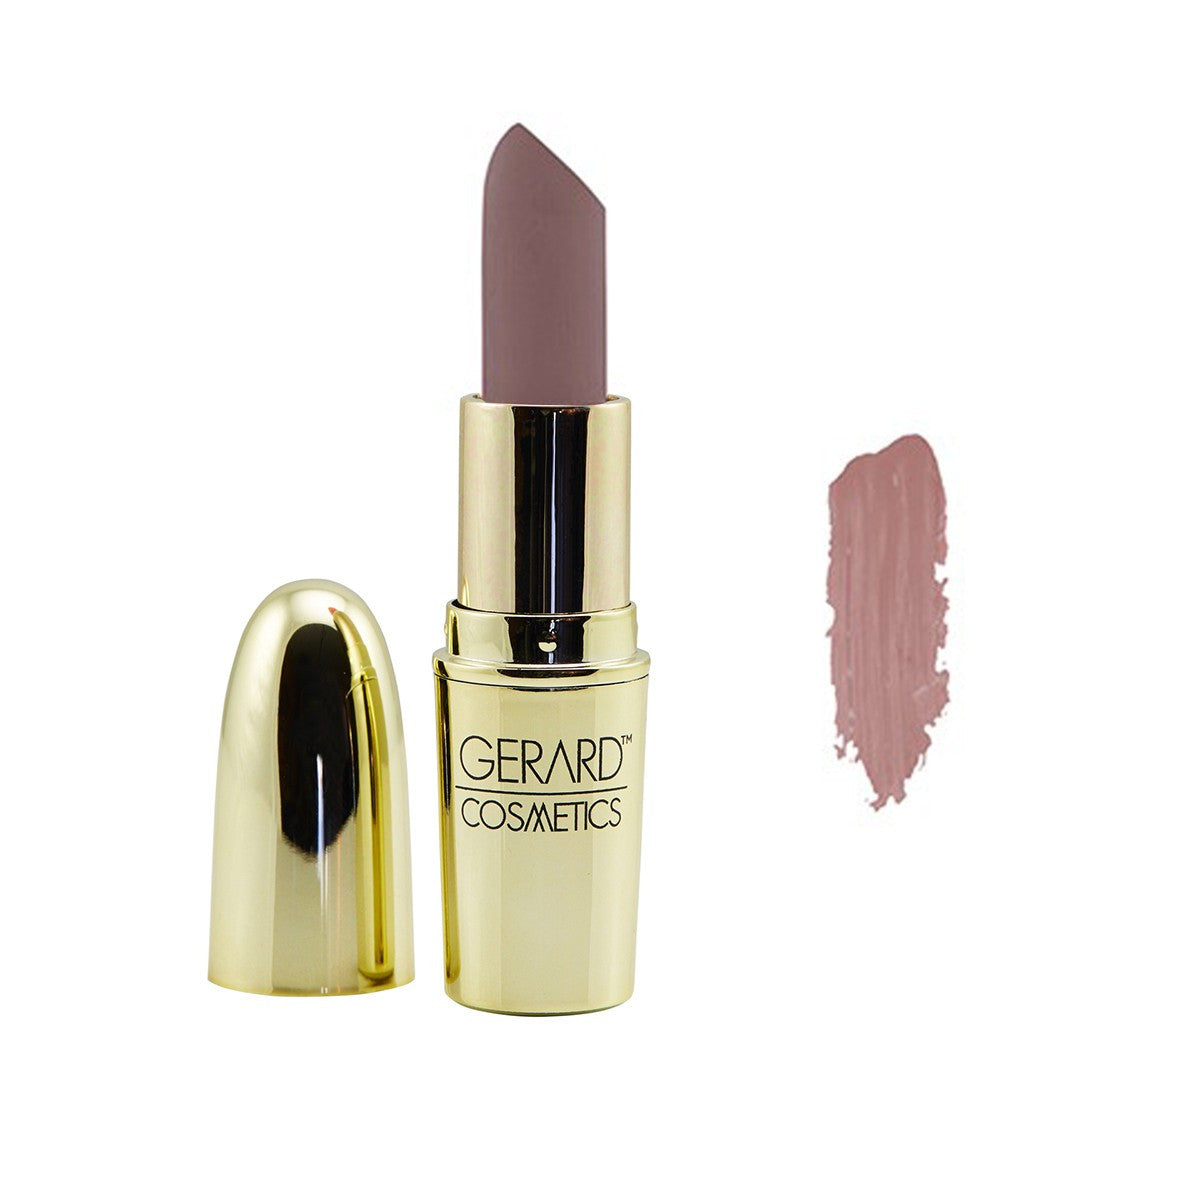 Gerard Cosmetics Lipstick 'Underground'